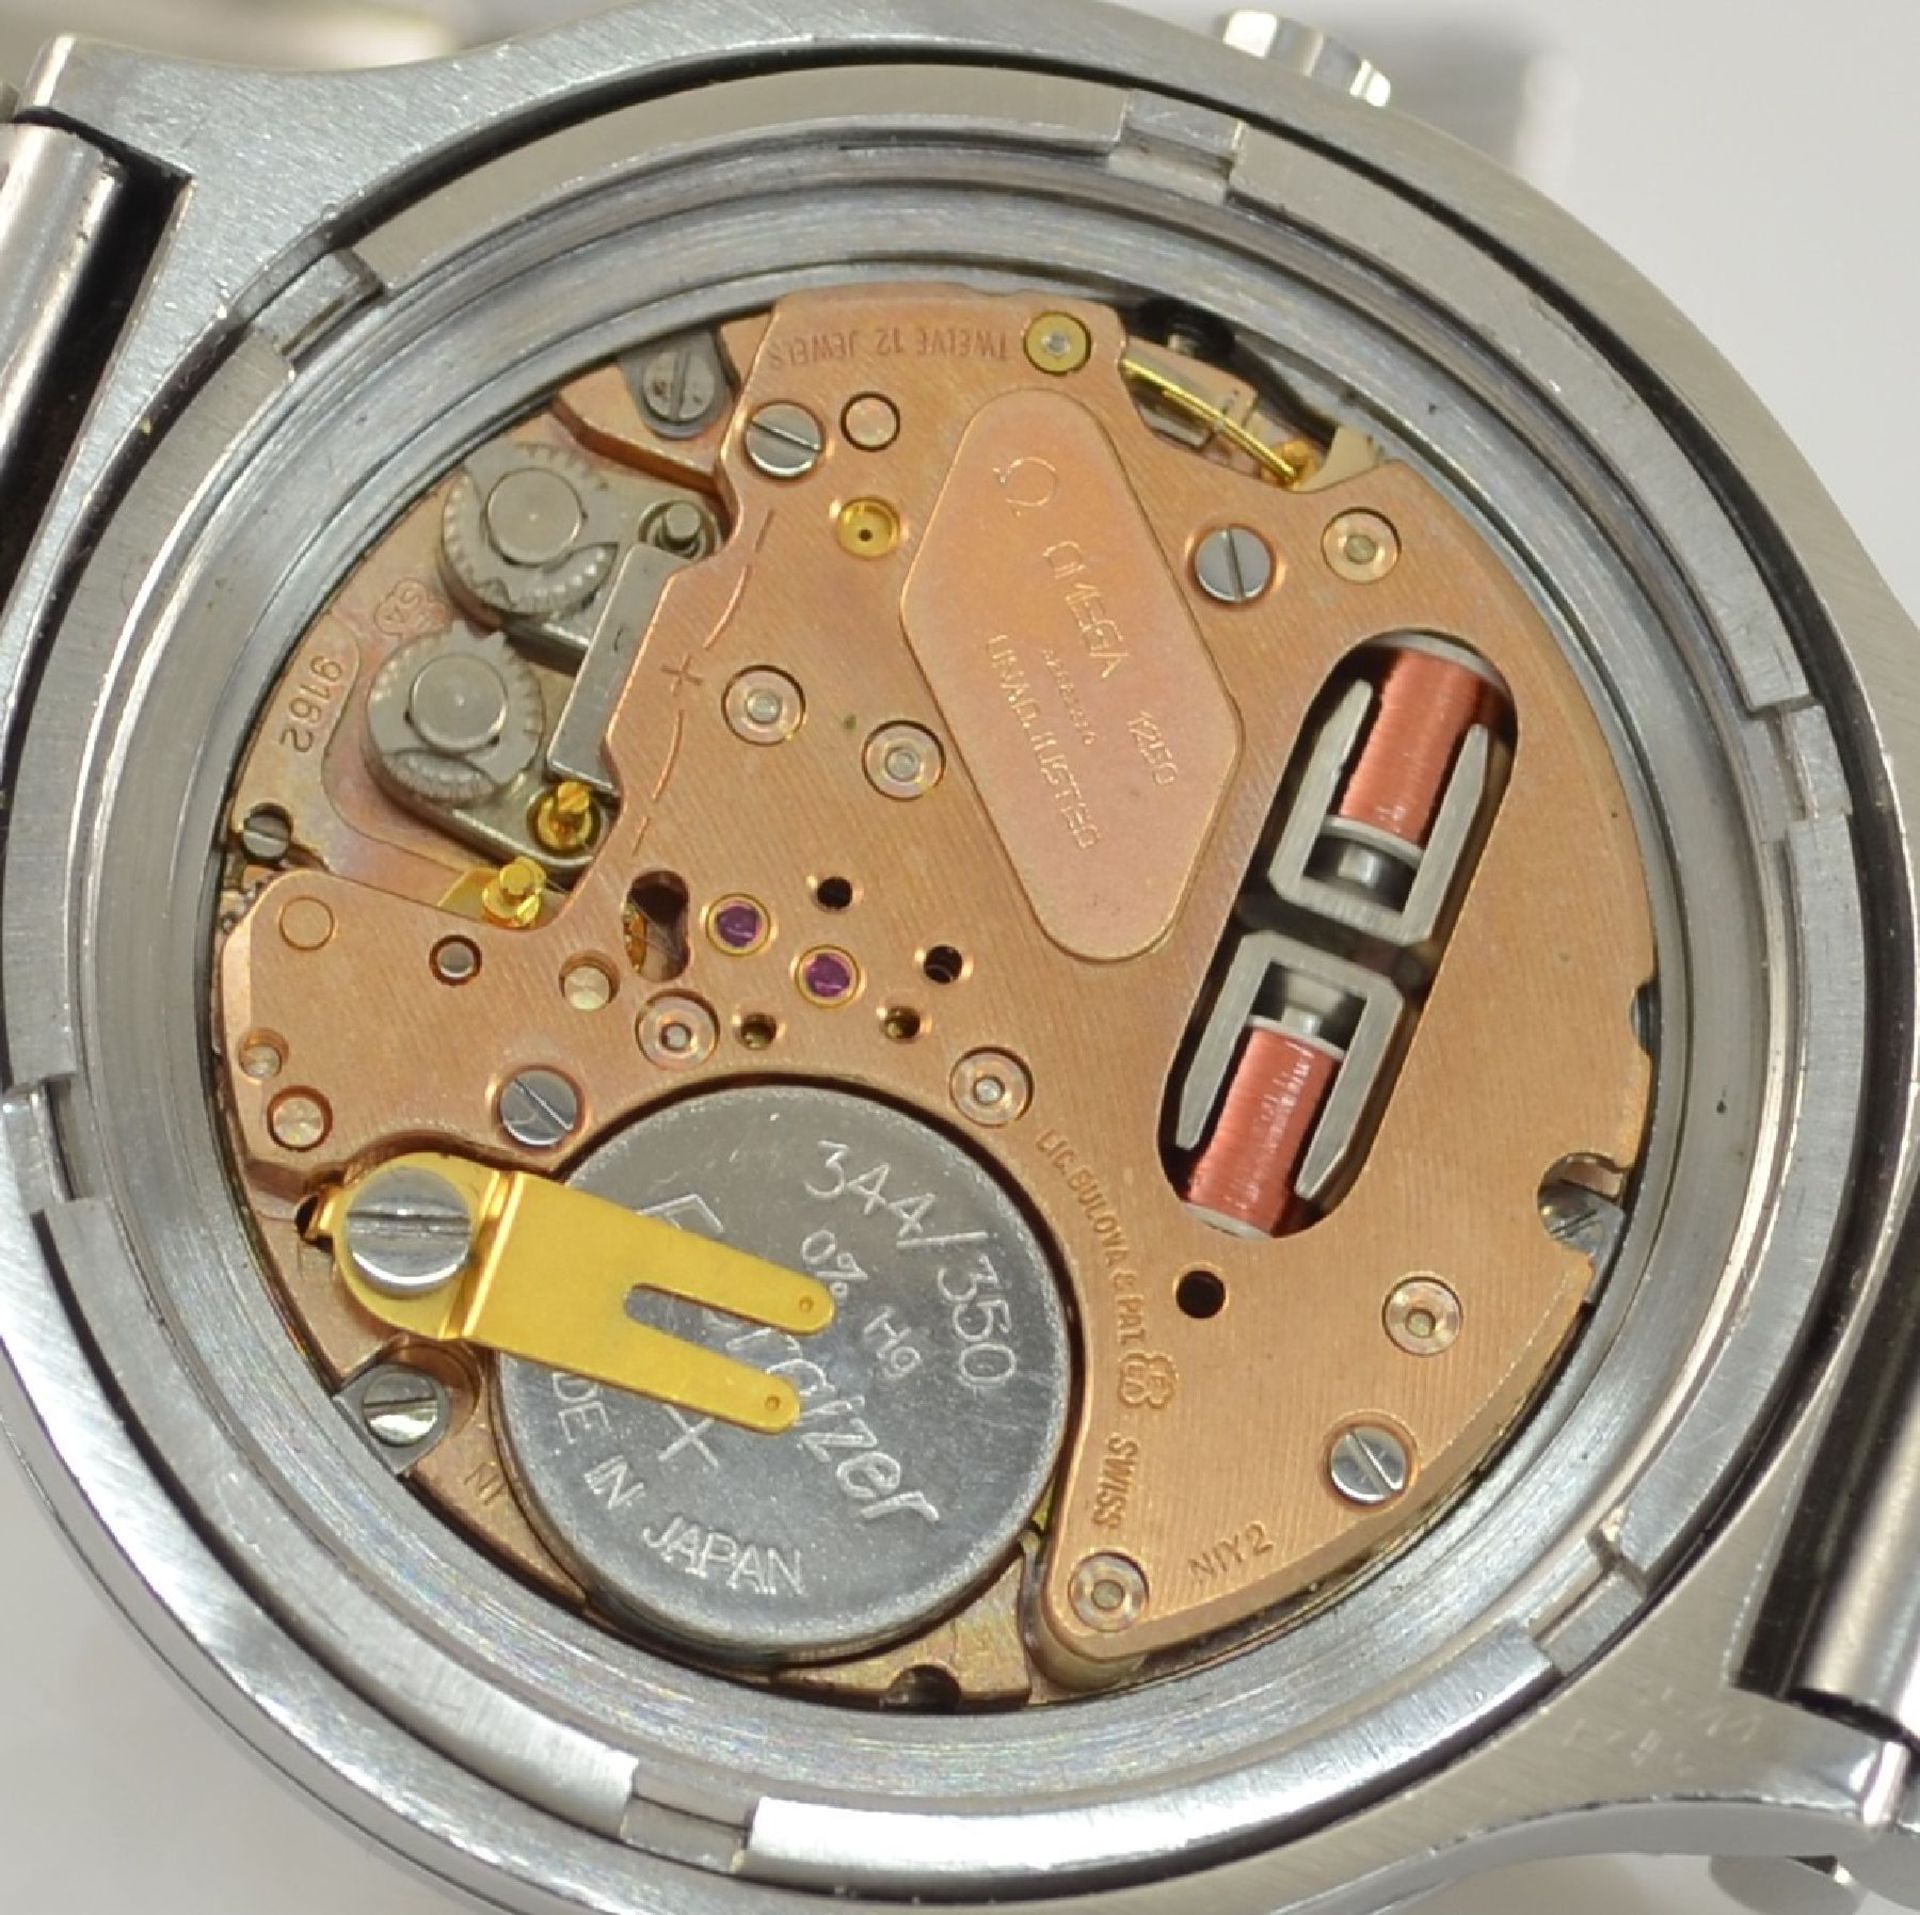 OMEGA Seamaster Chronometer Herrenarmbanduhr mit Stimmgabelschwinger, Schweiz um 1971, Ref. 198. - Bild 9 aus 11